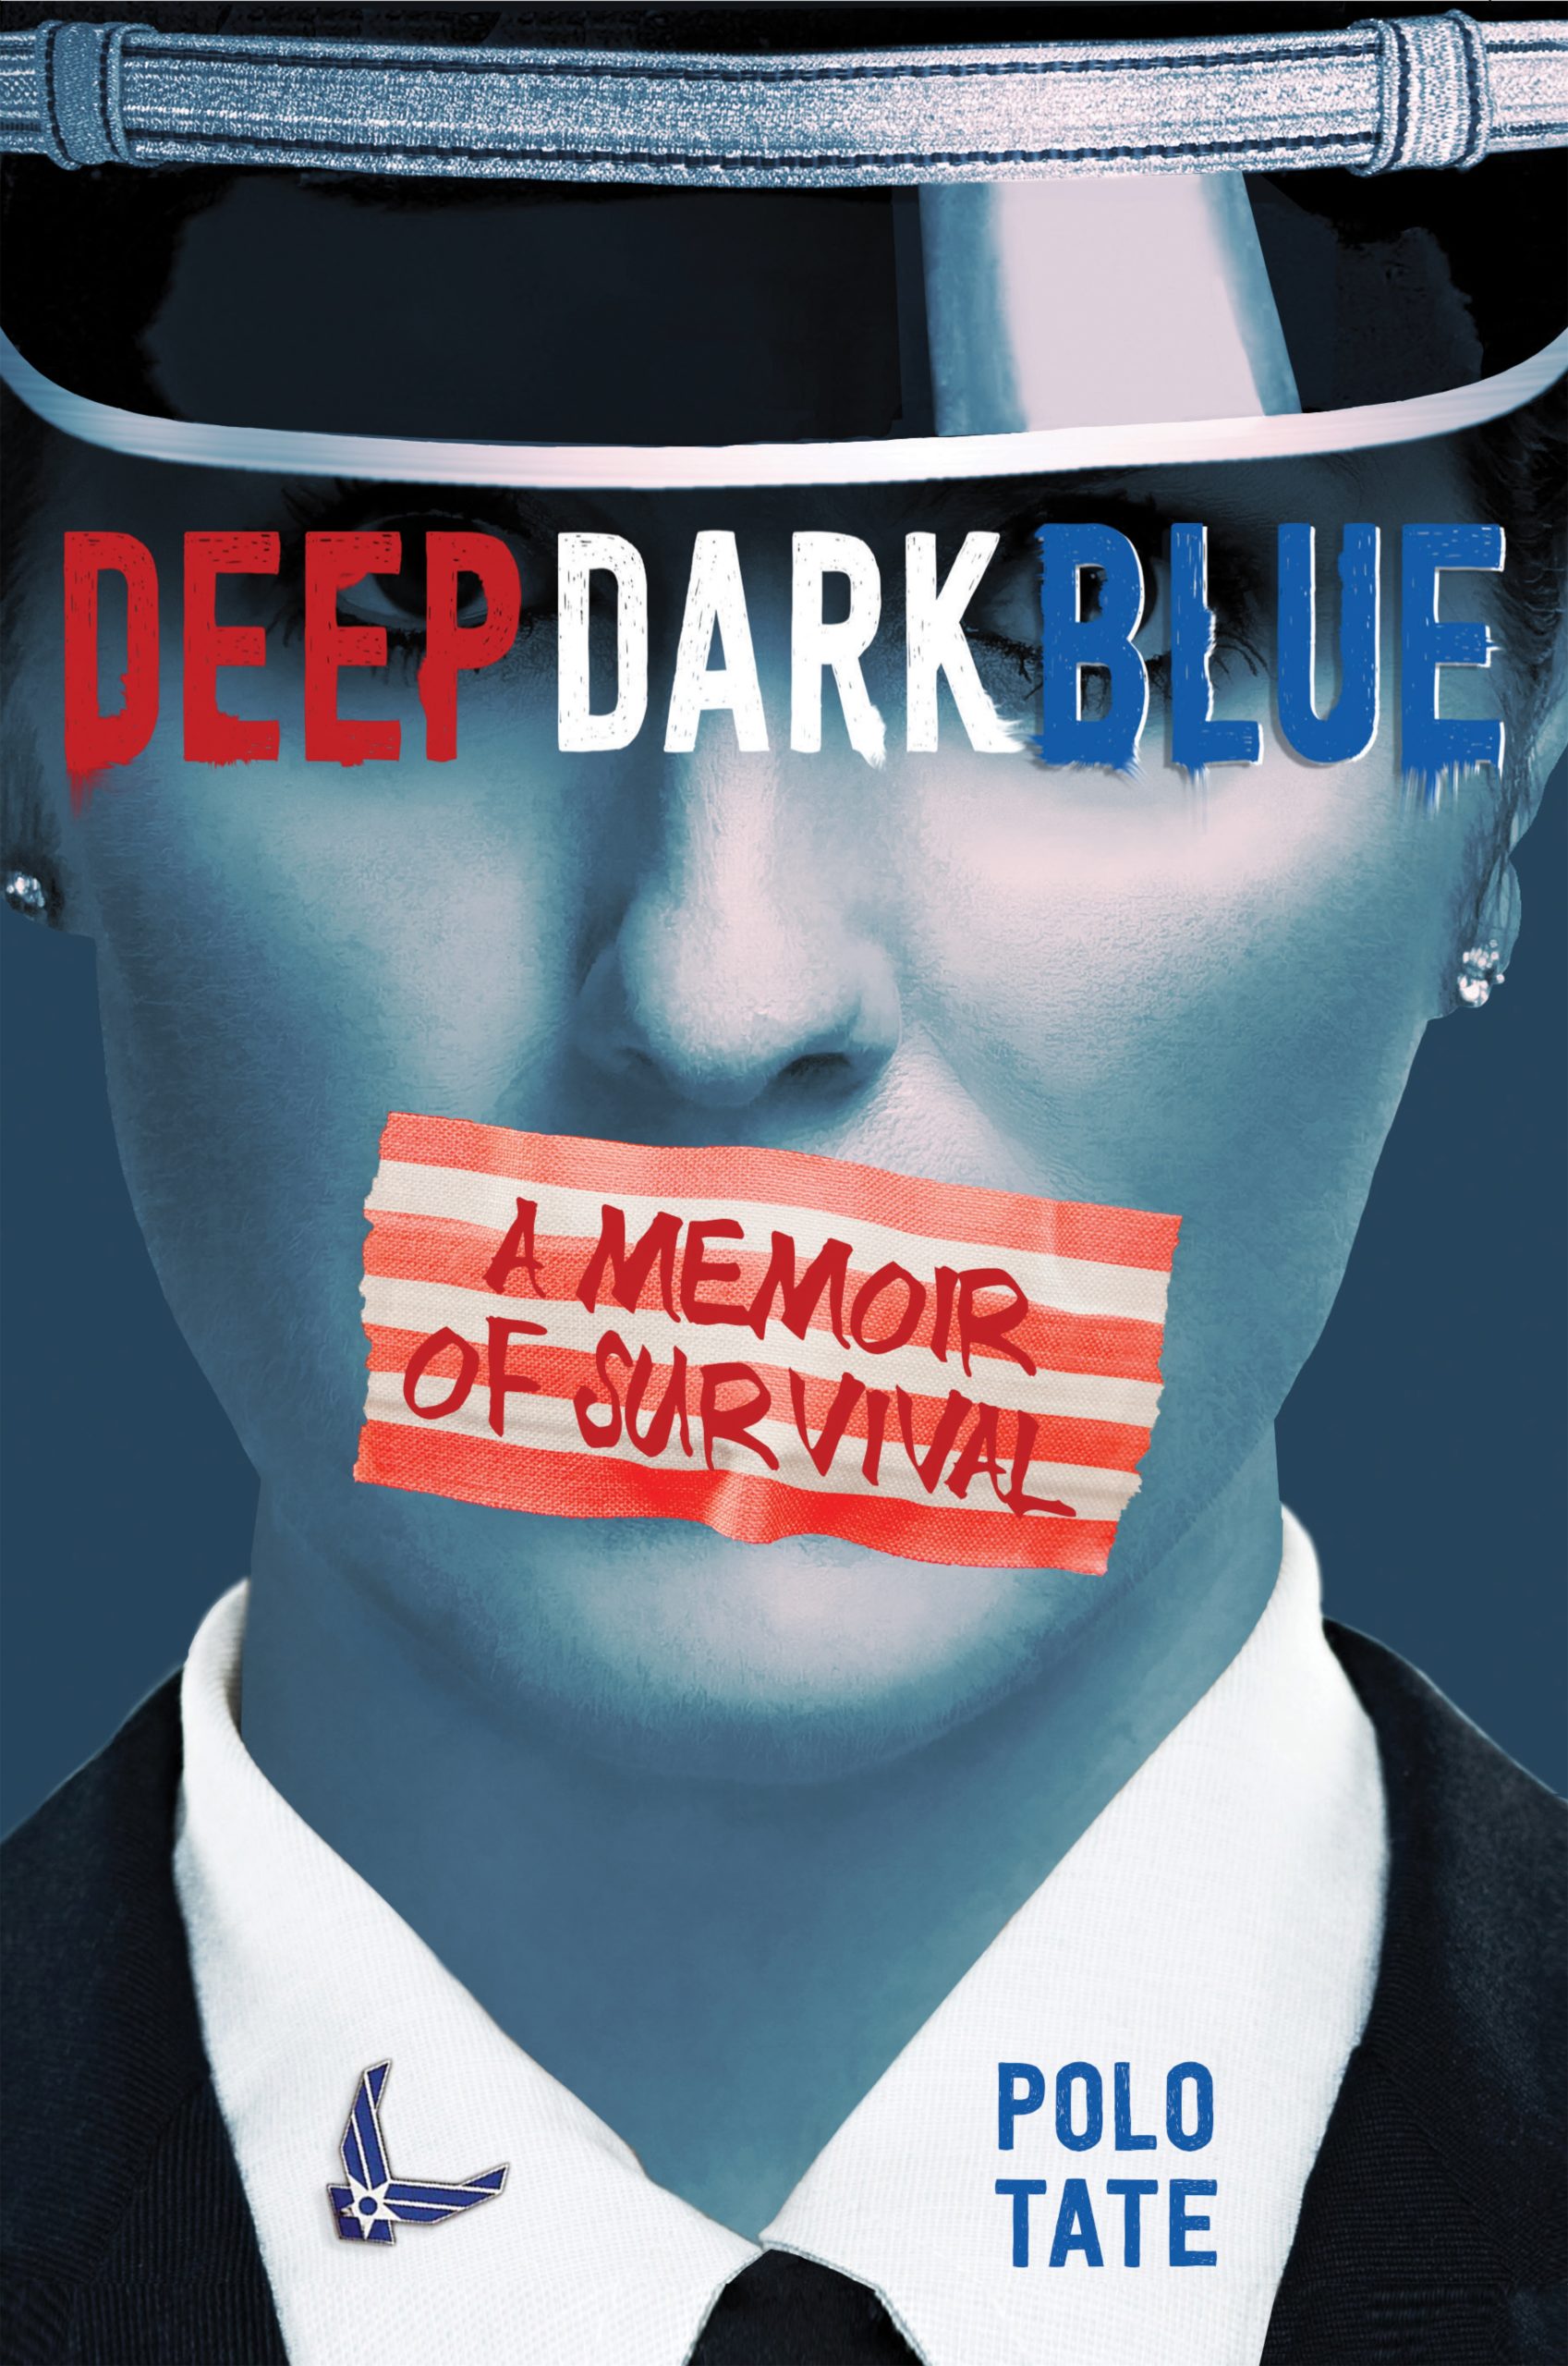 Book Deep Dark Blue